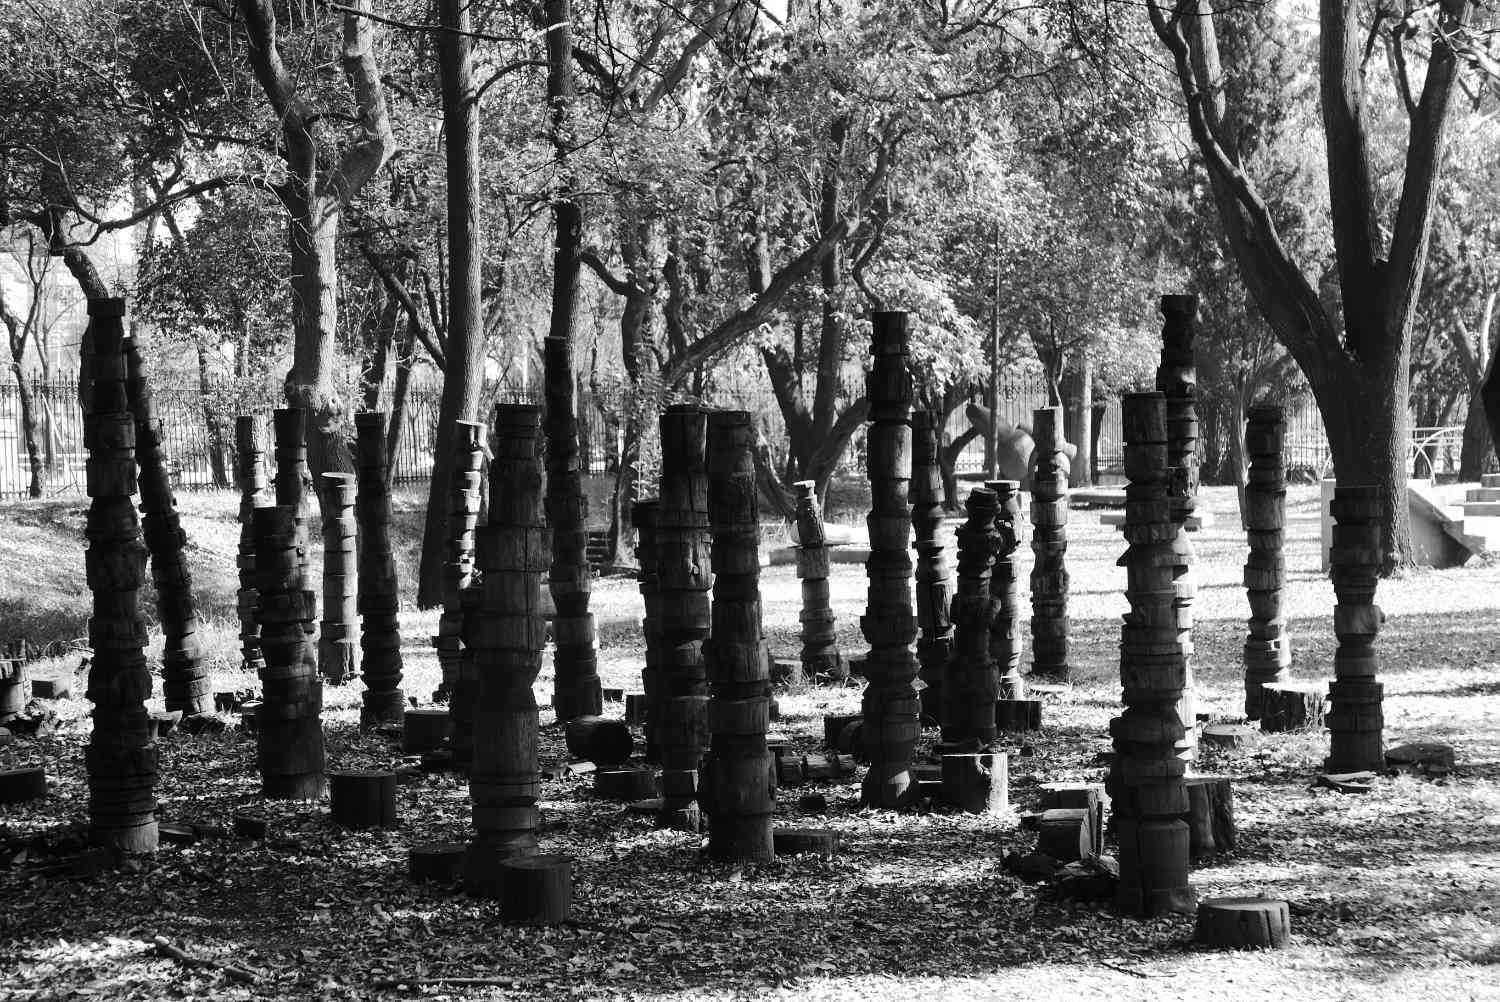 Sculpture garden of the Museo de Arte Contemporaneo in Chapultepec park